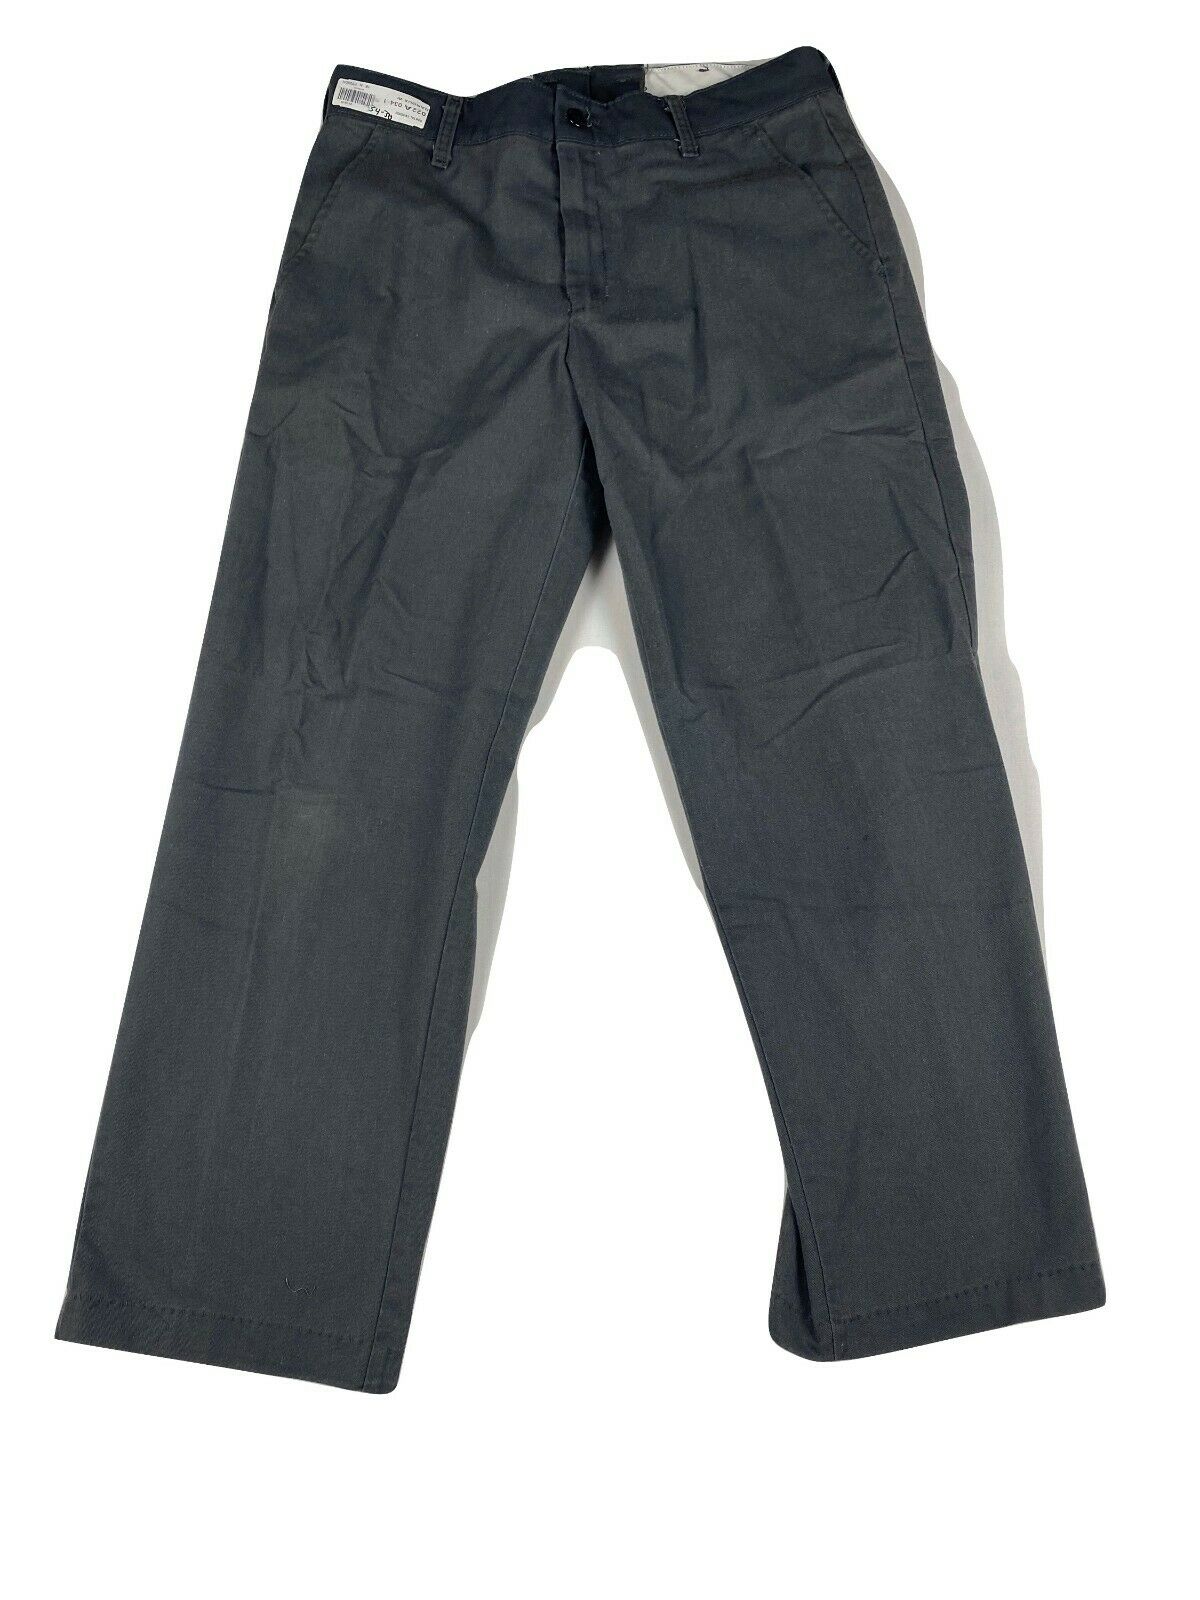 Gray Work Pants - Red Kap, Cintas, Dickies, Unifirst Etc - Grey Used Uniform